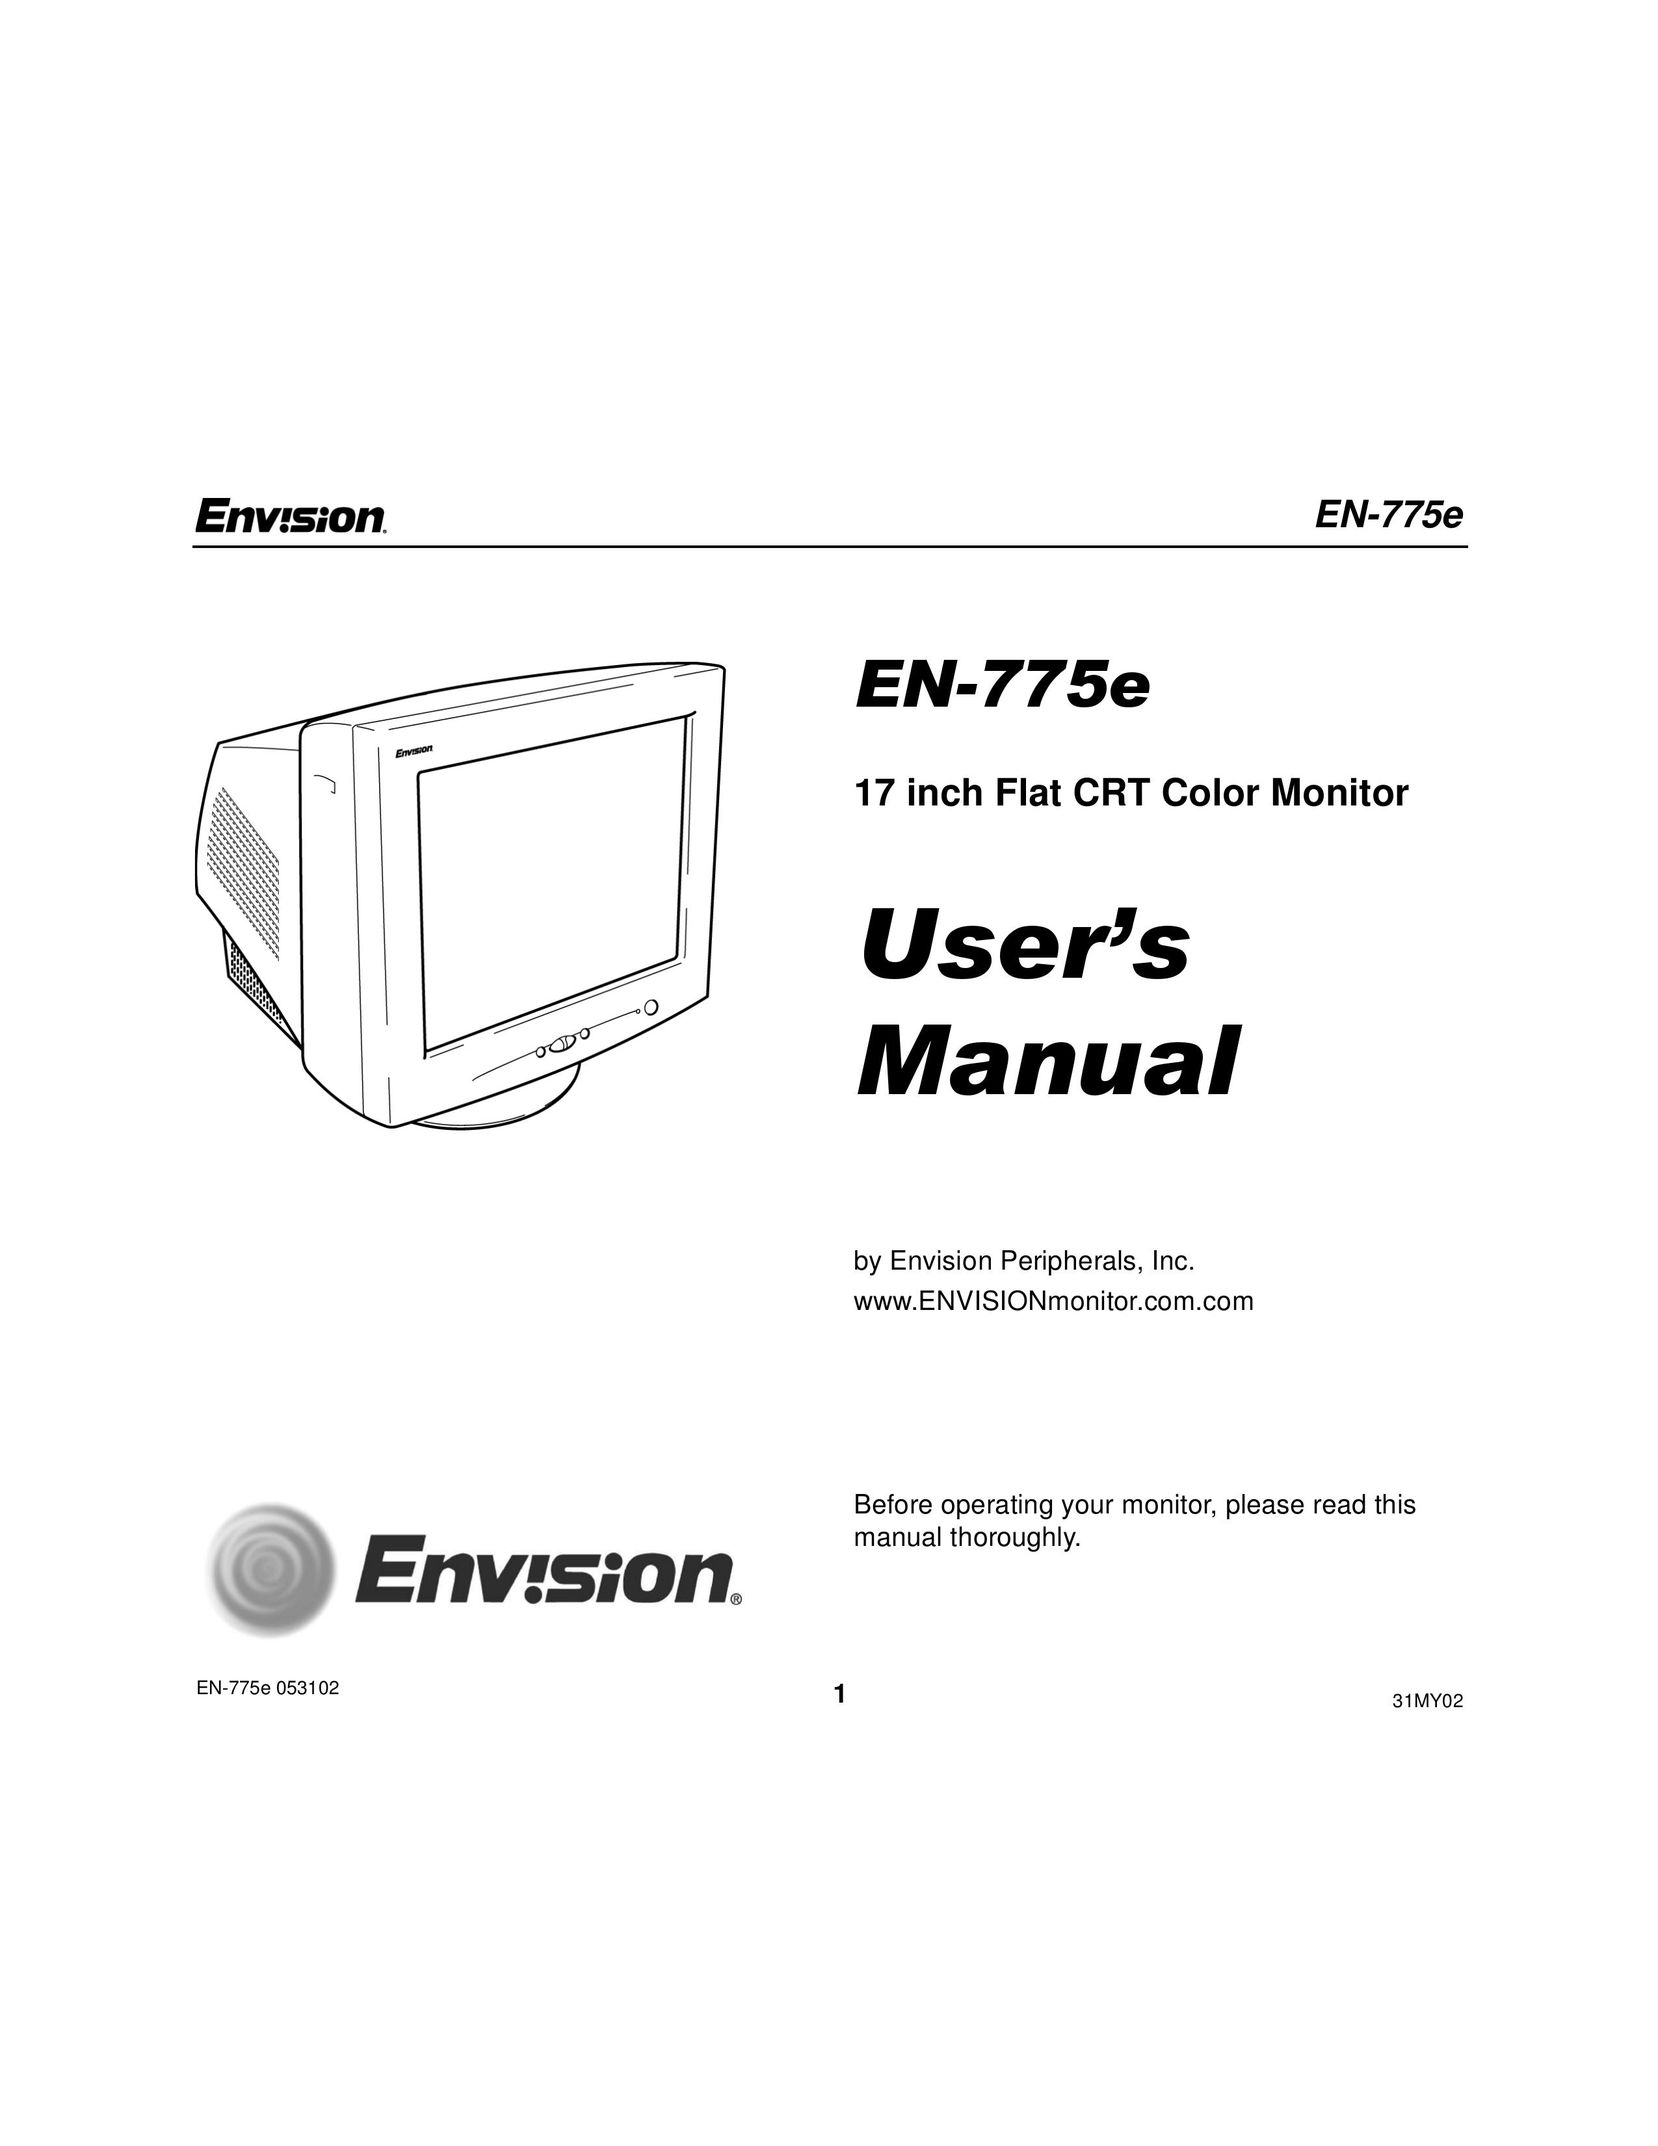 Envision Peripherals EN-775E Computer Monitor User Manual